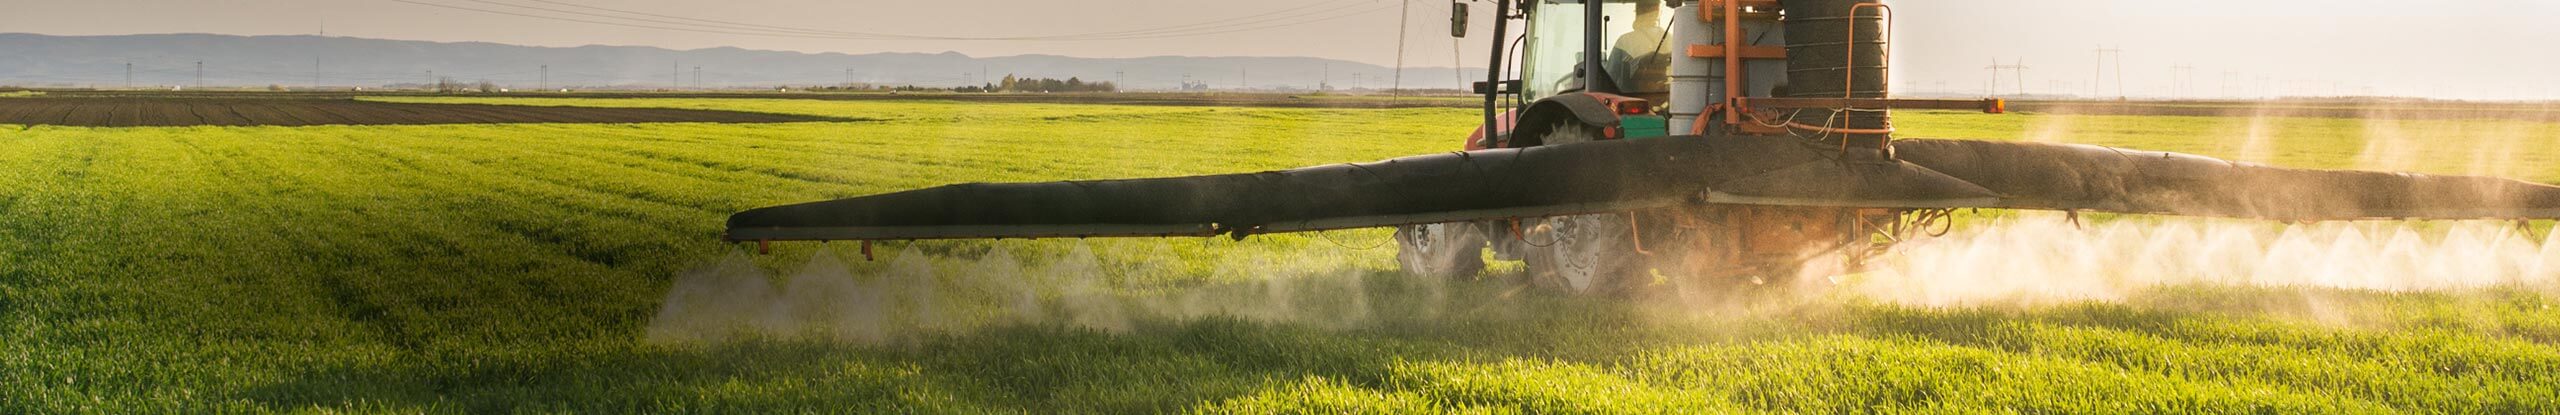 Optimum nitrogen fertilizer management strategies for high-yielding spring wheat in Manitoba